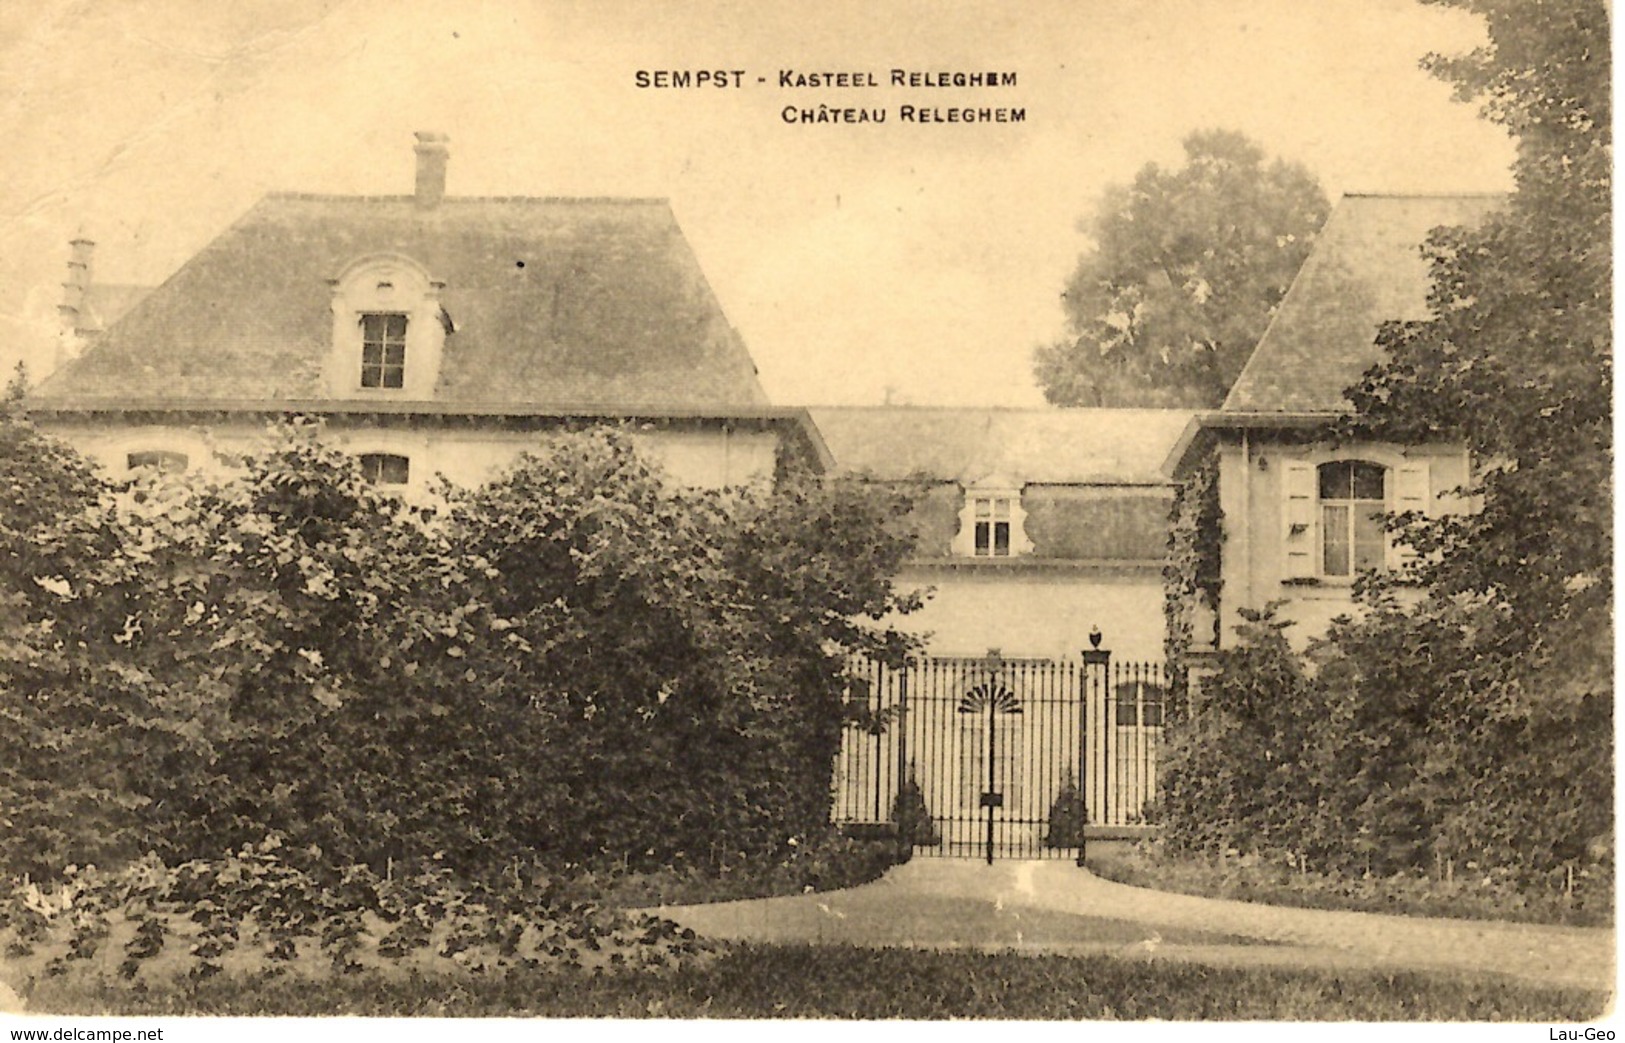 Sempst (Ternat). Kasteel Releghem - Château Releghem - Ternat